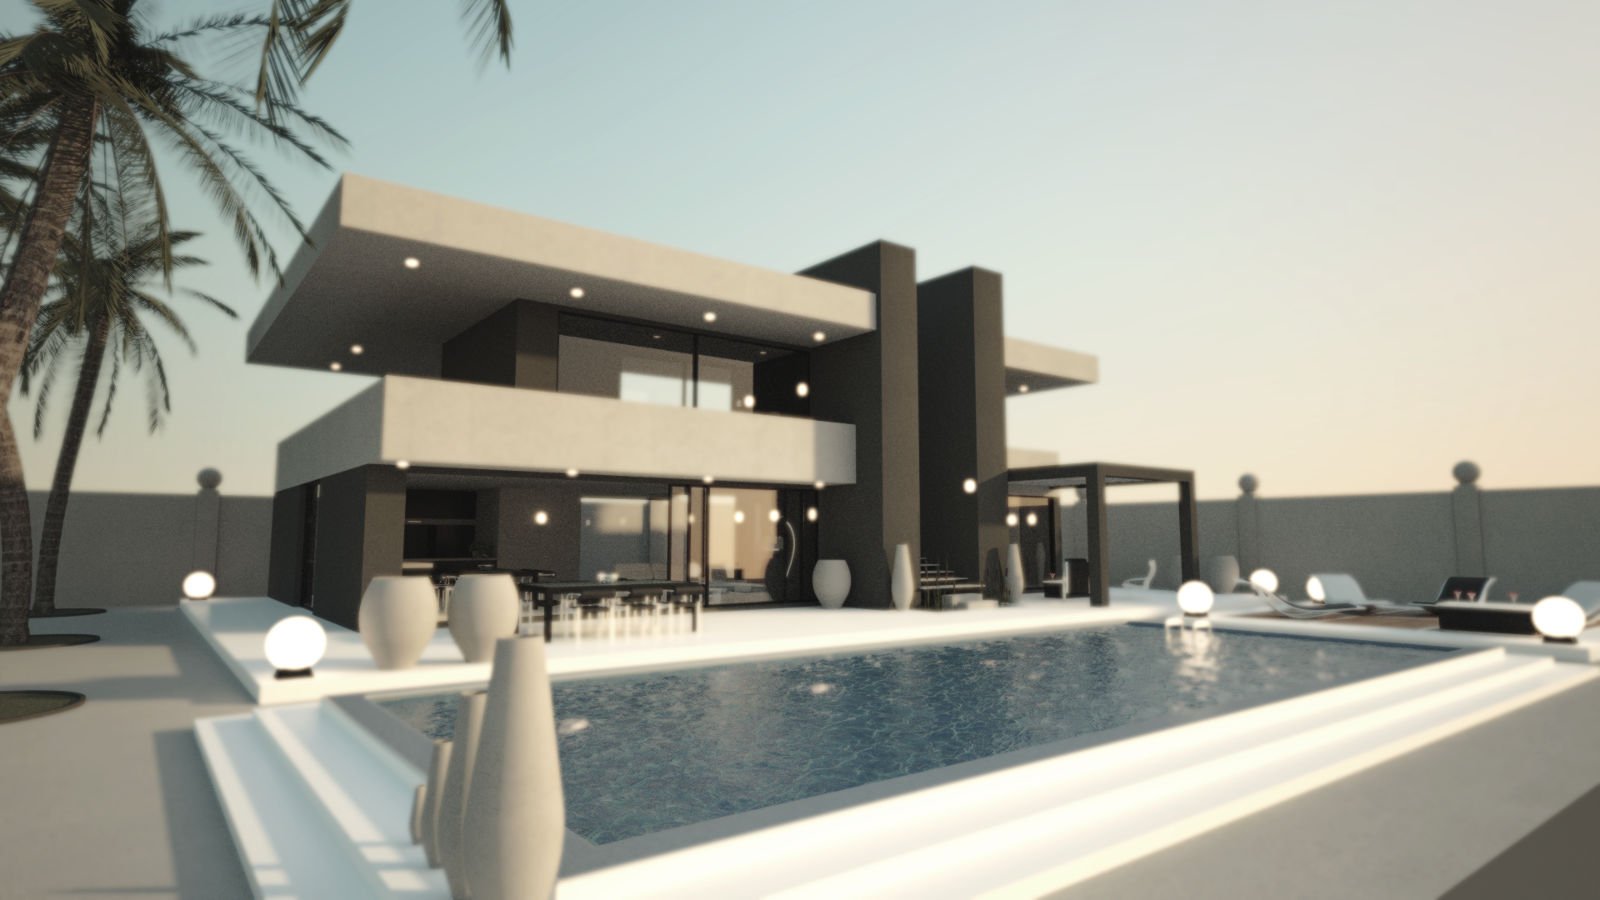 Modern Villa by: Mely3D, 3D Models by Daz 3D